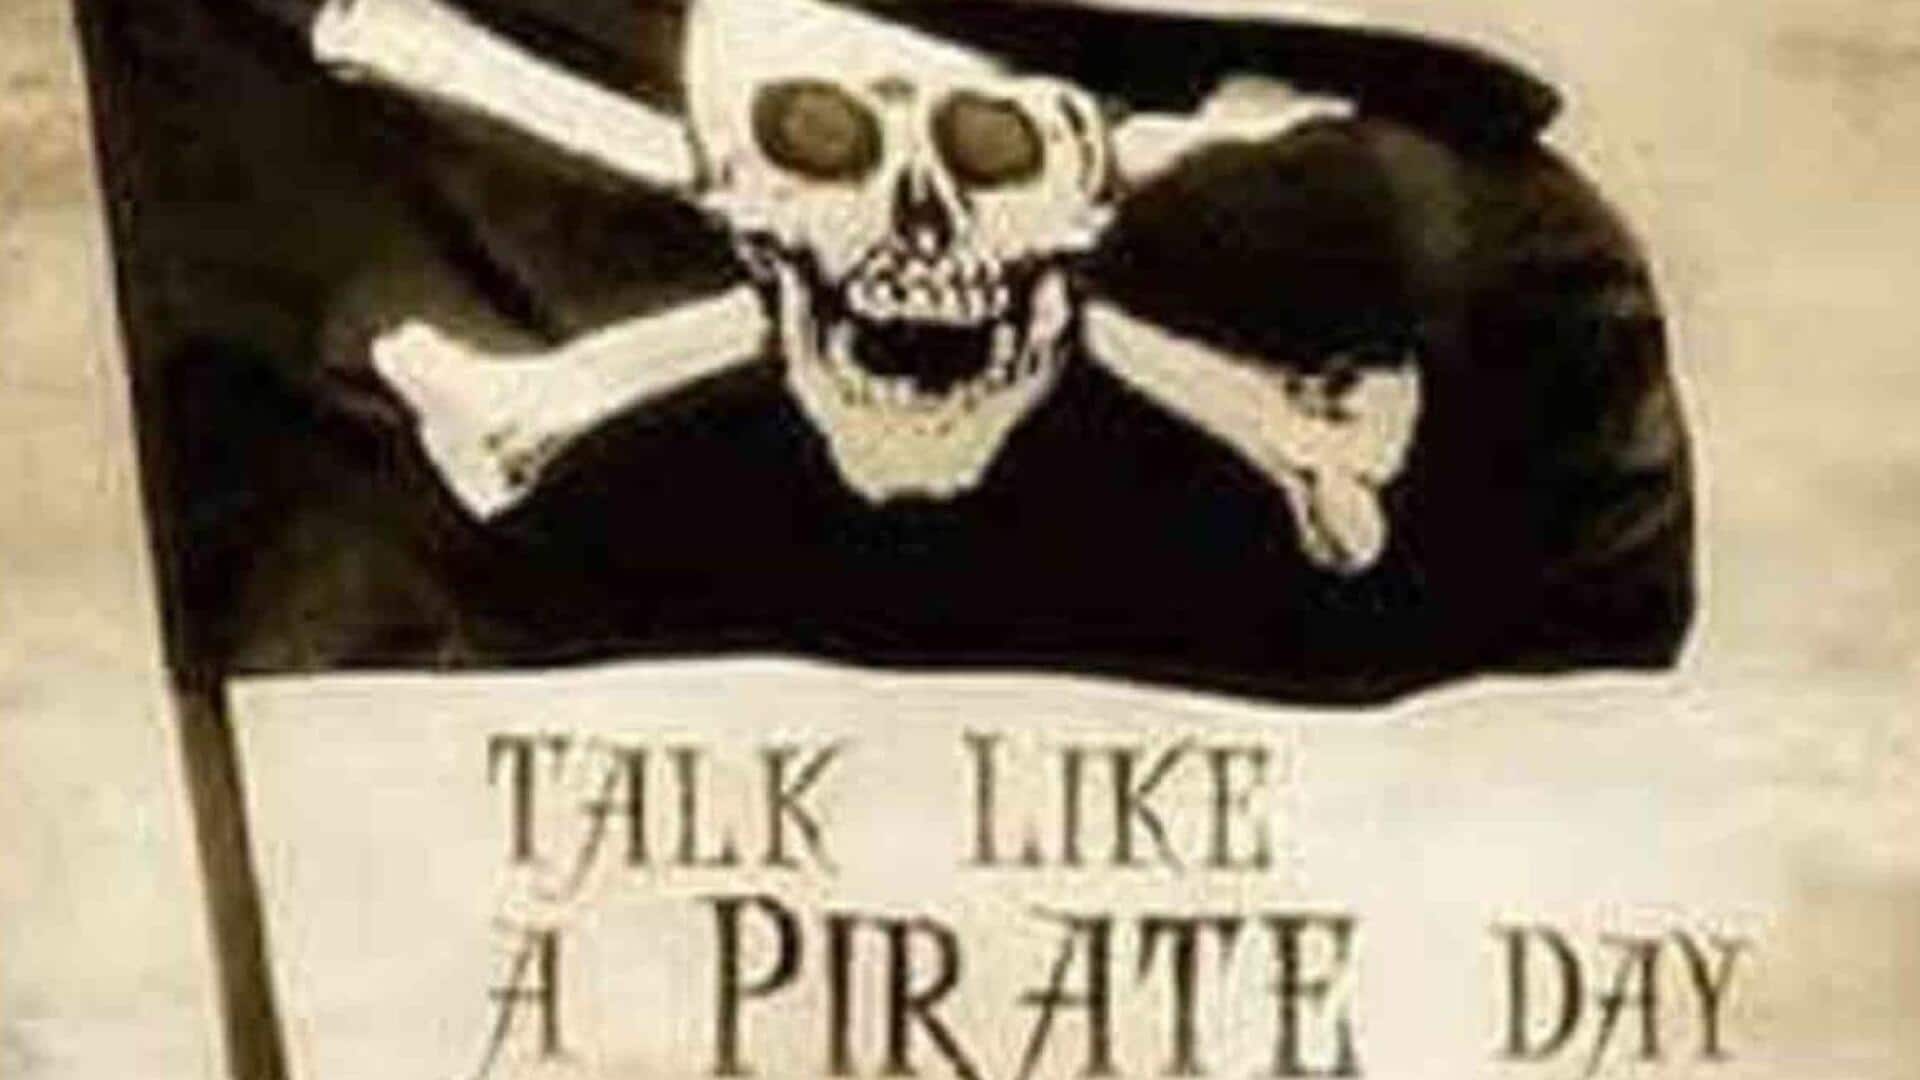 Talk Like A Pirate Day: చిత్ర విచిత్రమైన పనులు చేయడానికి ఒక రోజుందని మీకు తెలుసా? 